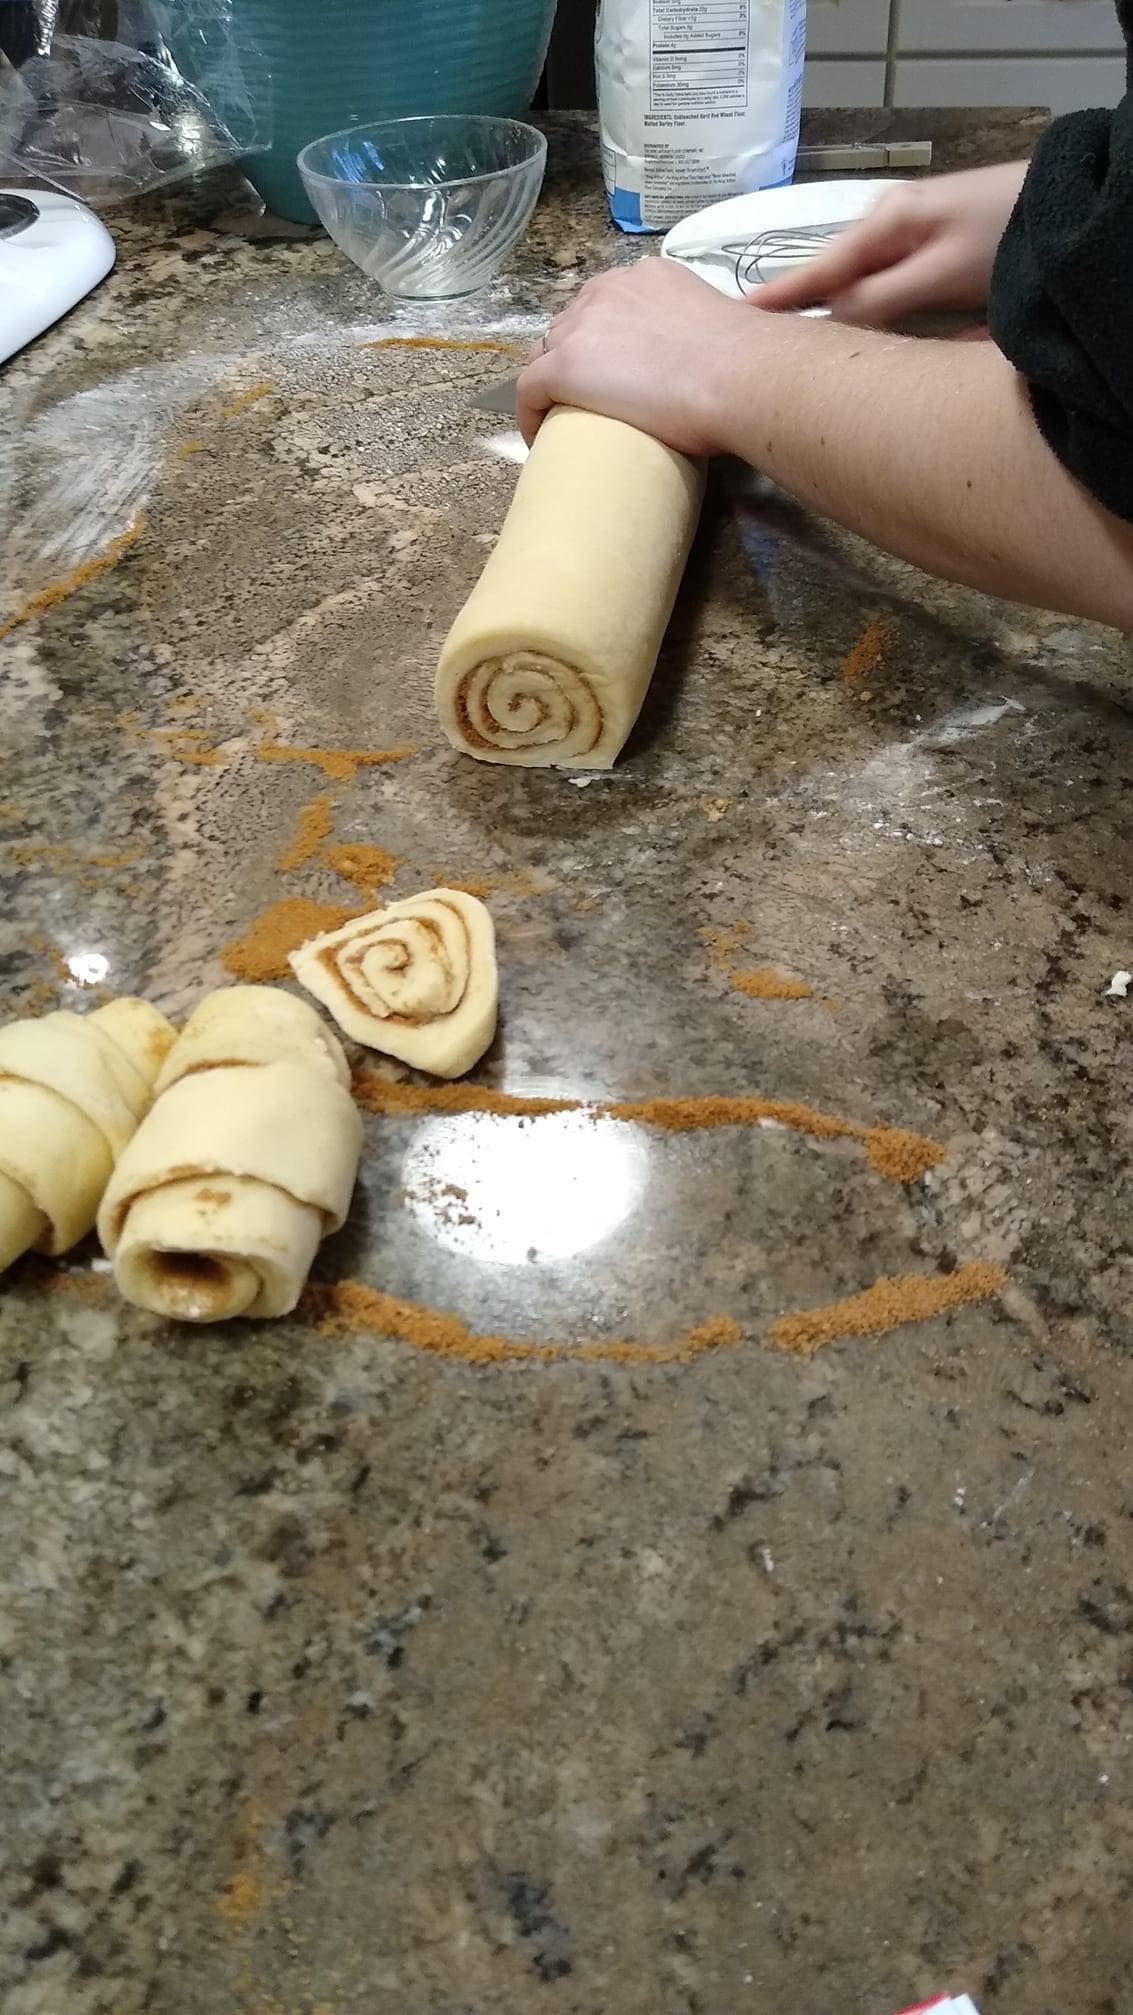 Emma Tabenken cutting cinnamon rolls to bake.